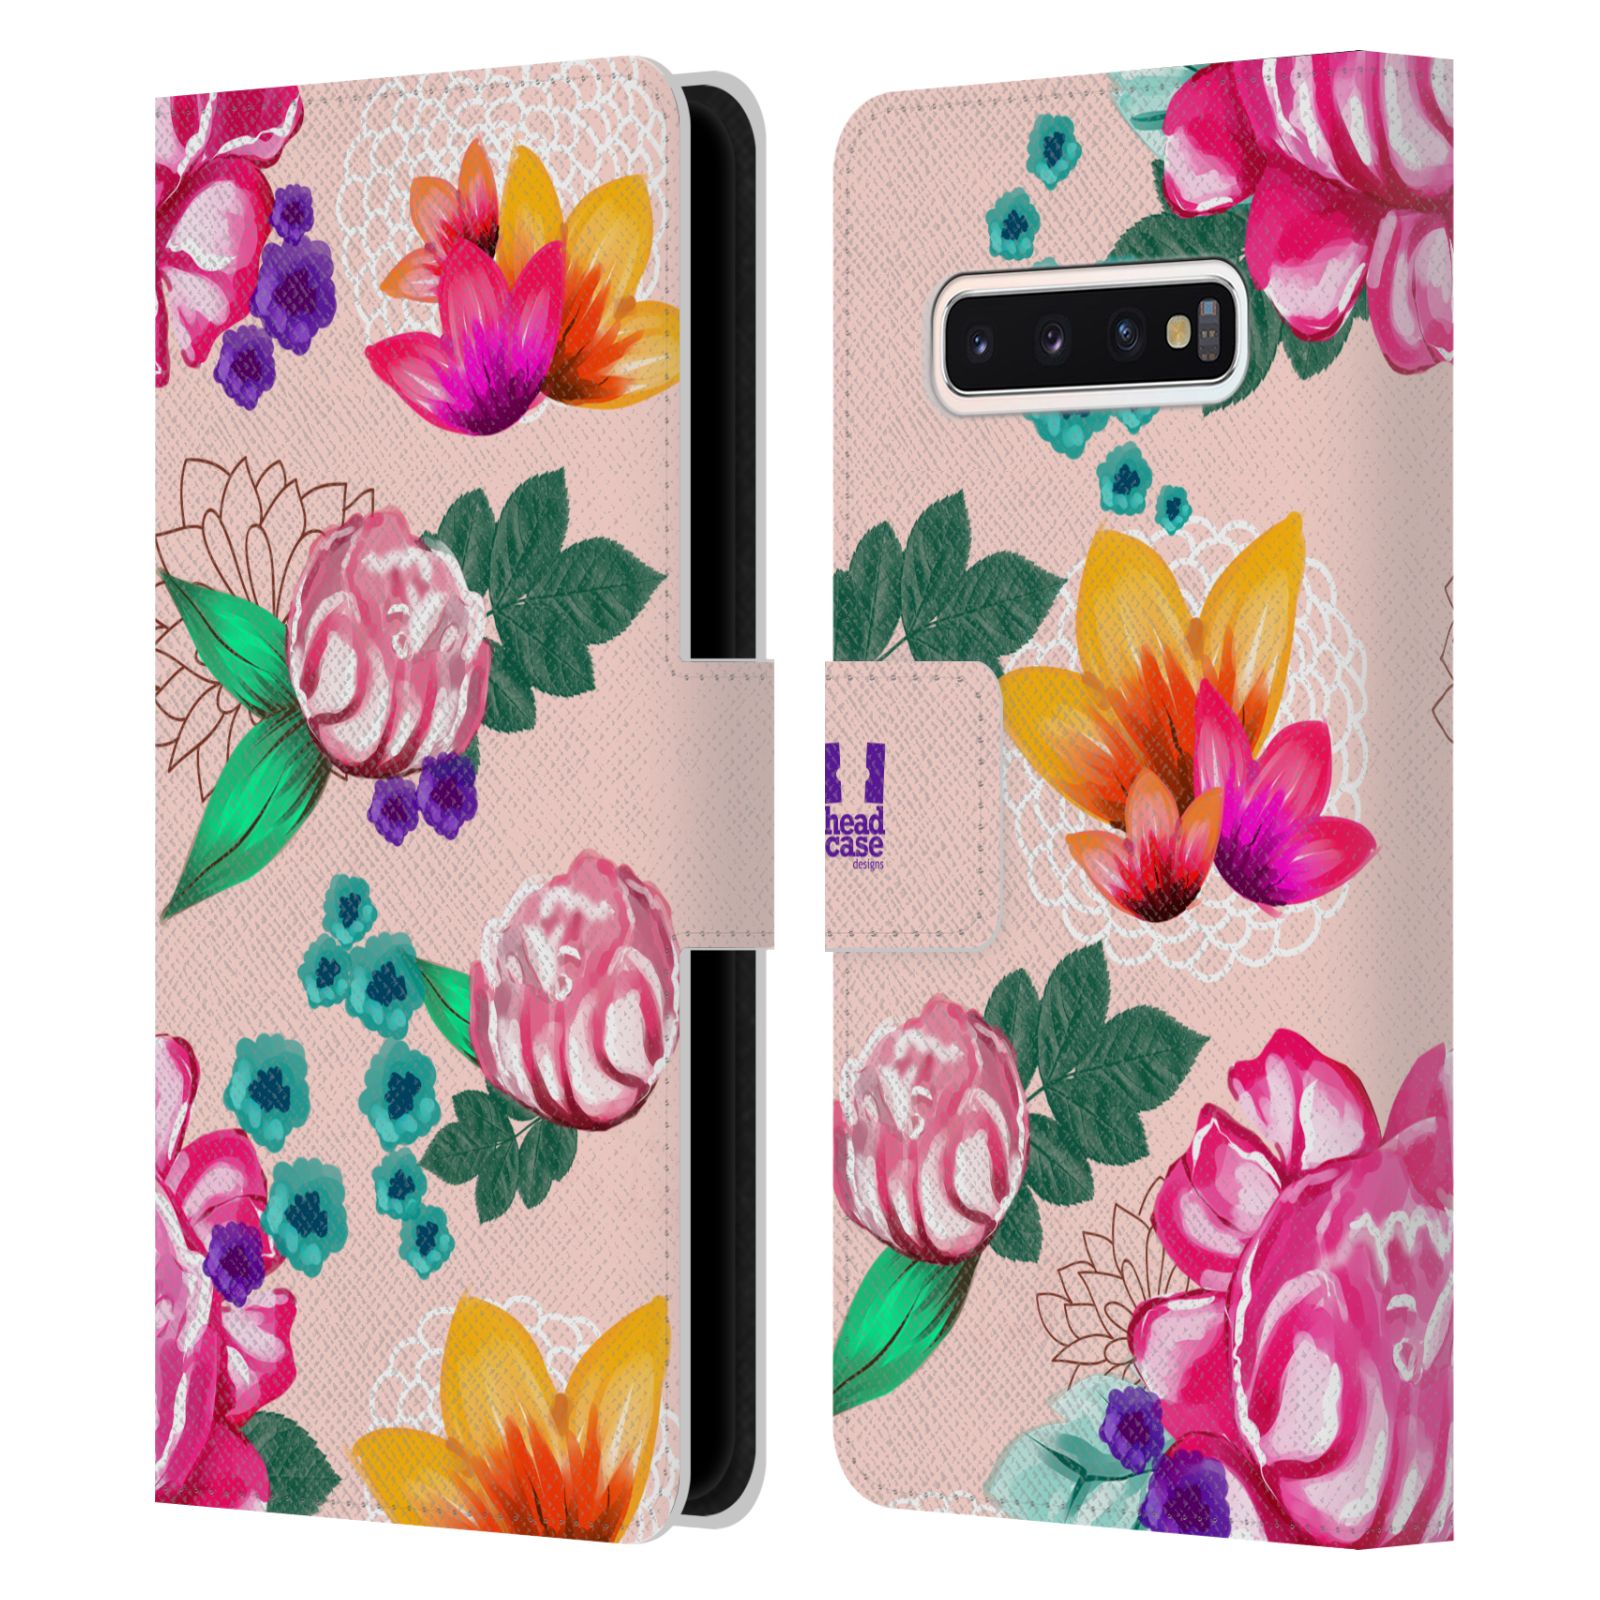 Pouzdro HEAD CASE na mobil Samsung Galaxy S10 barevné kreslené květiny růžová